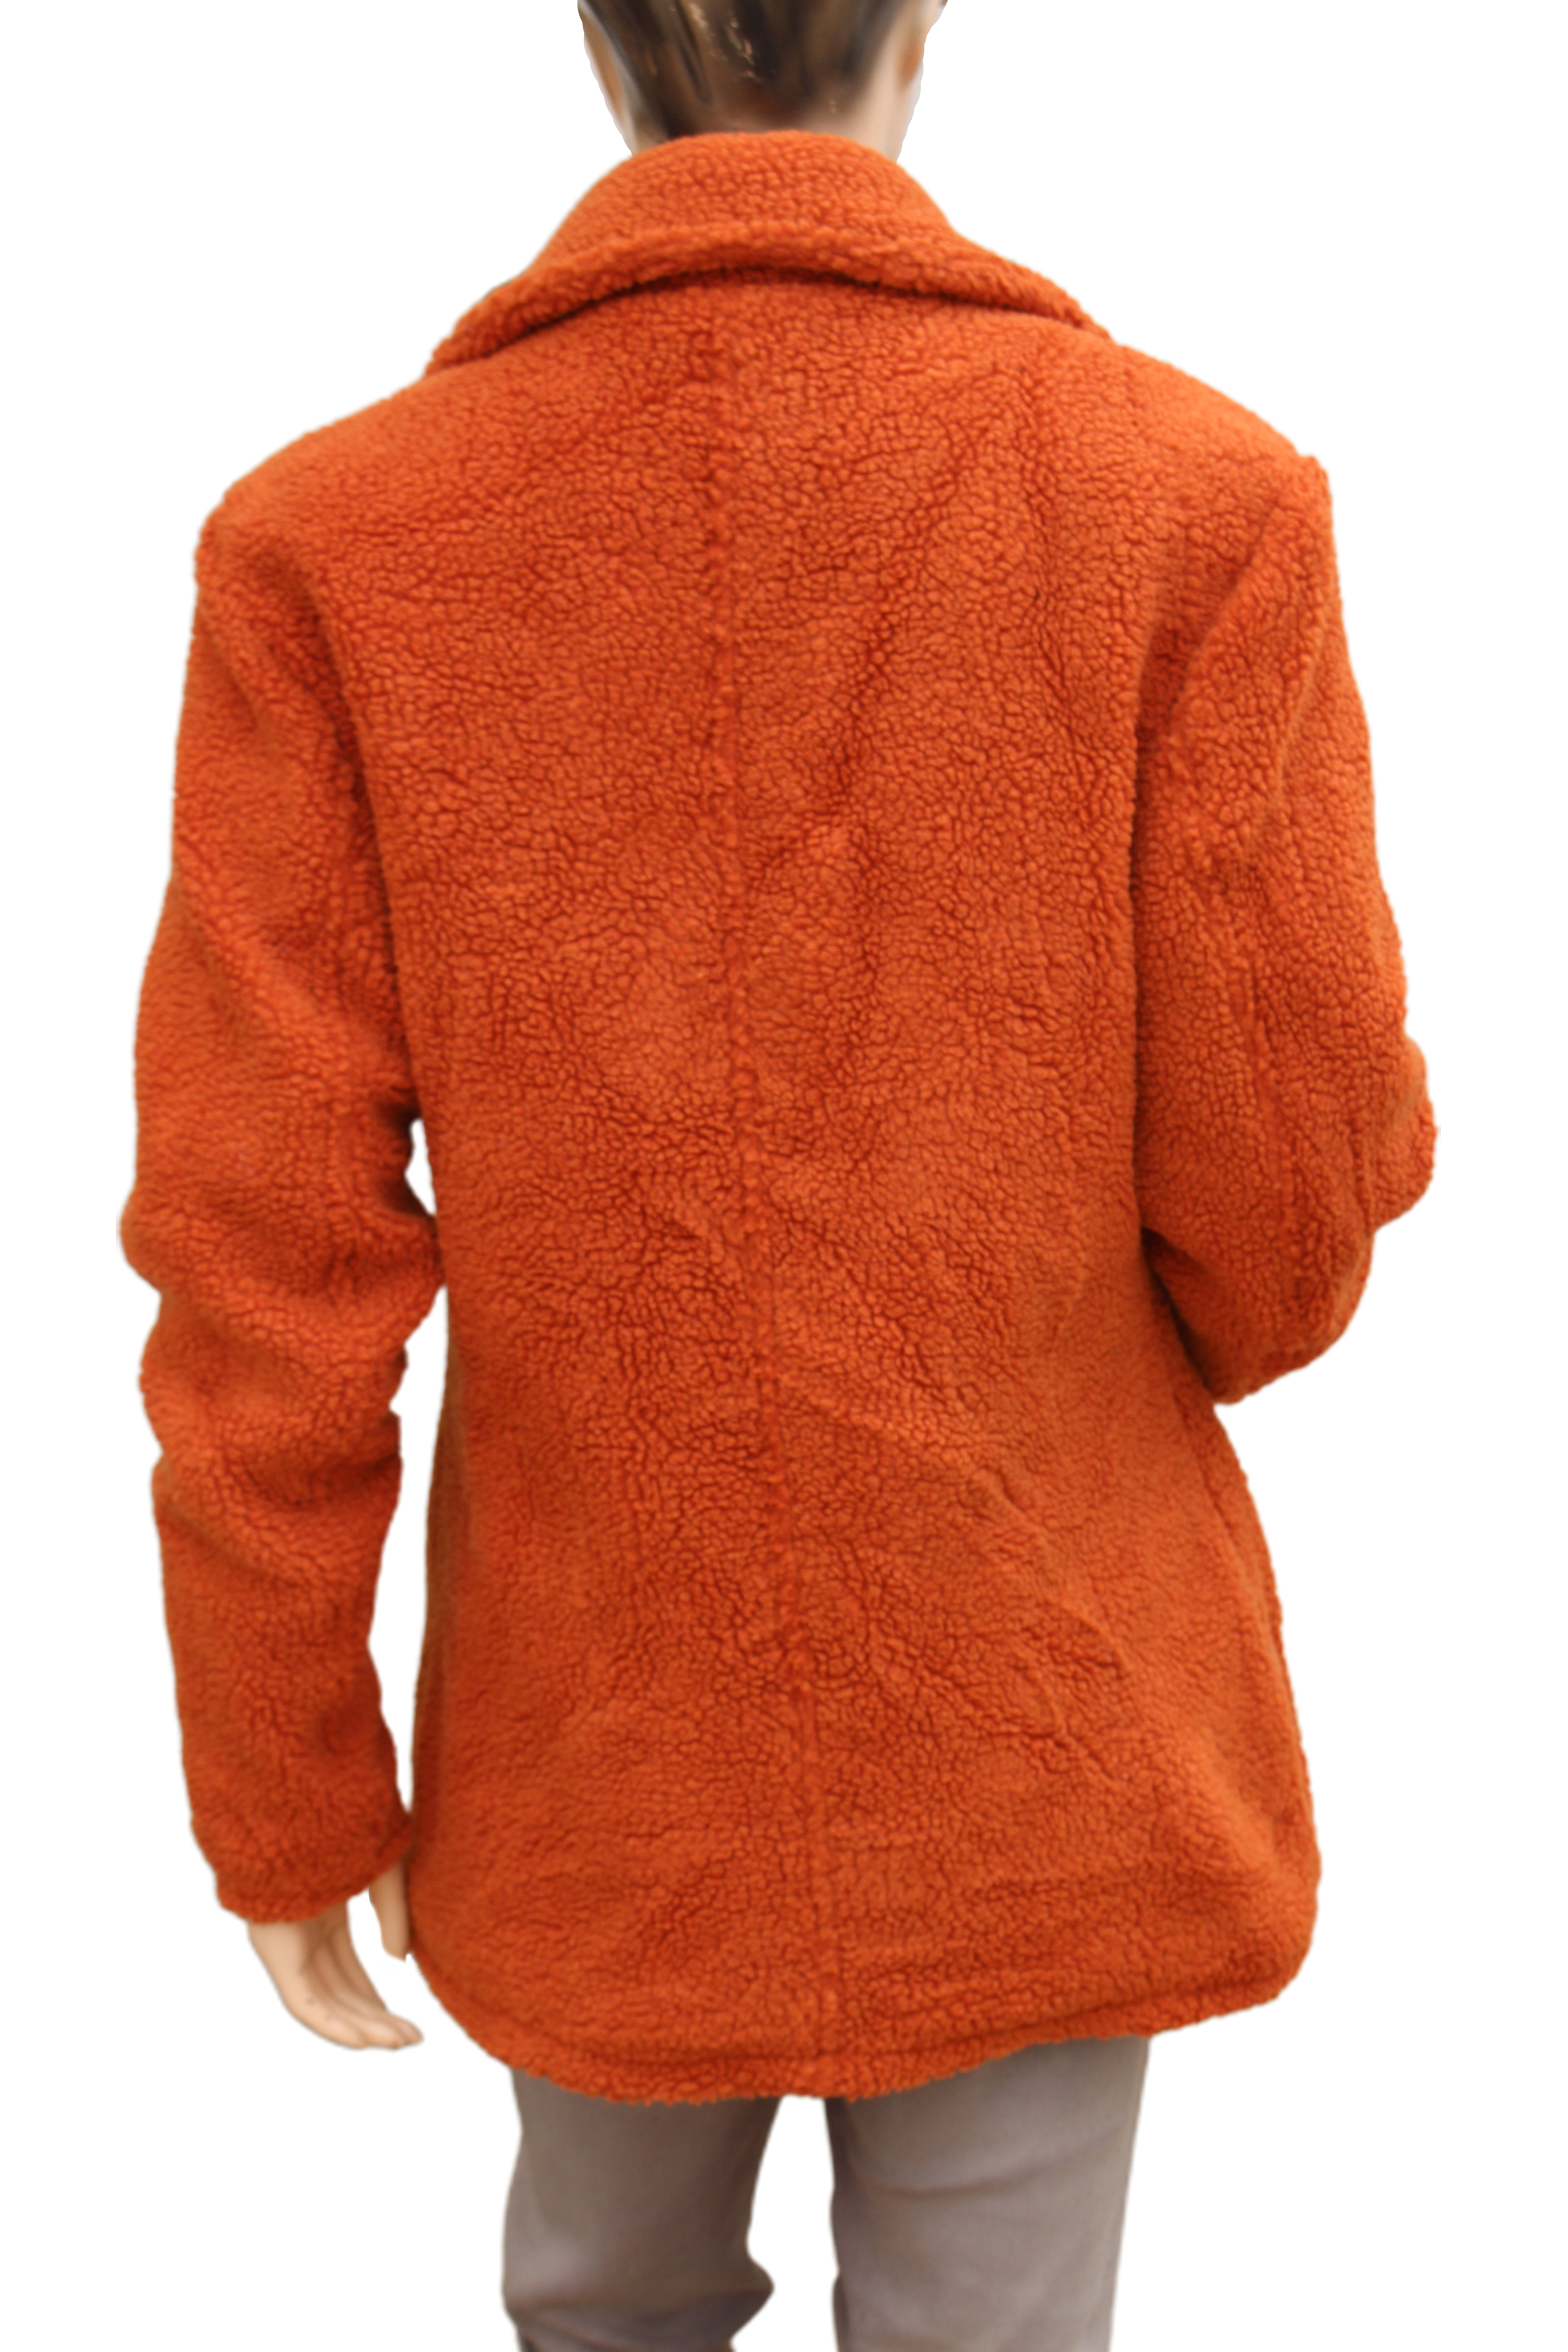 Yellowstone Beth Dutton Orange Coat